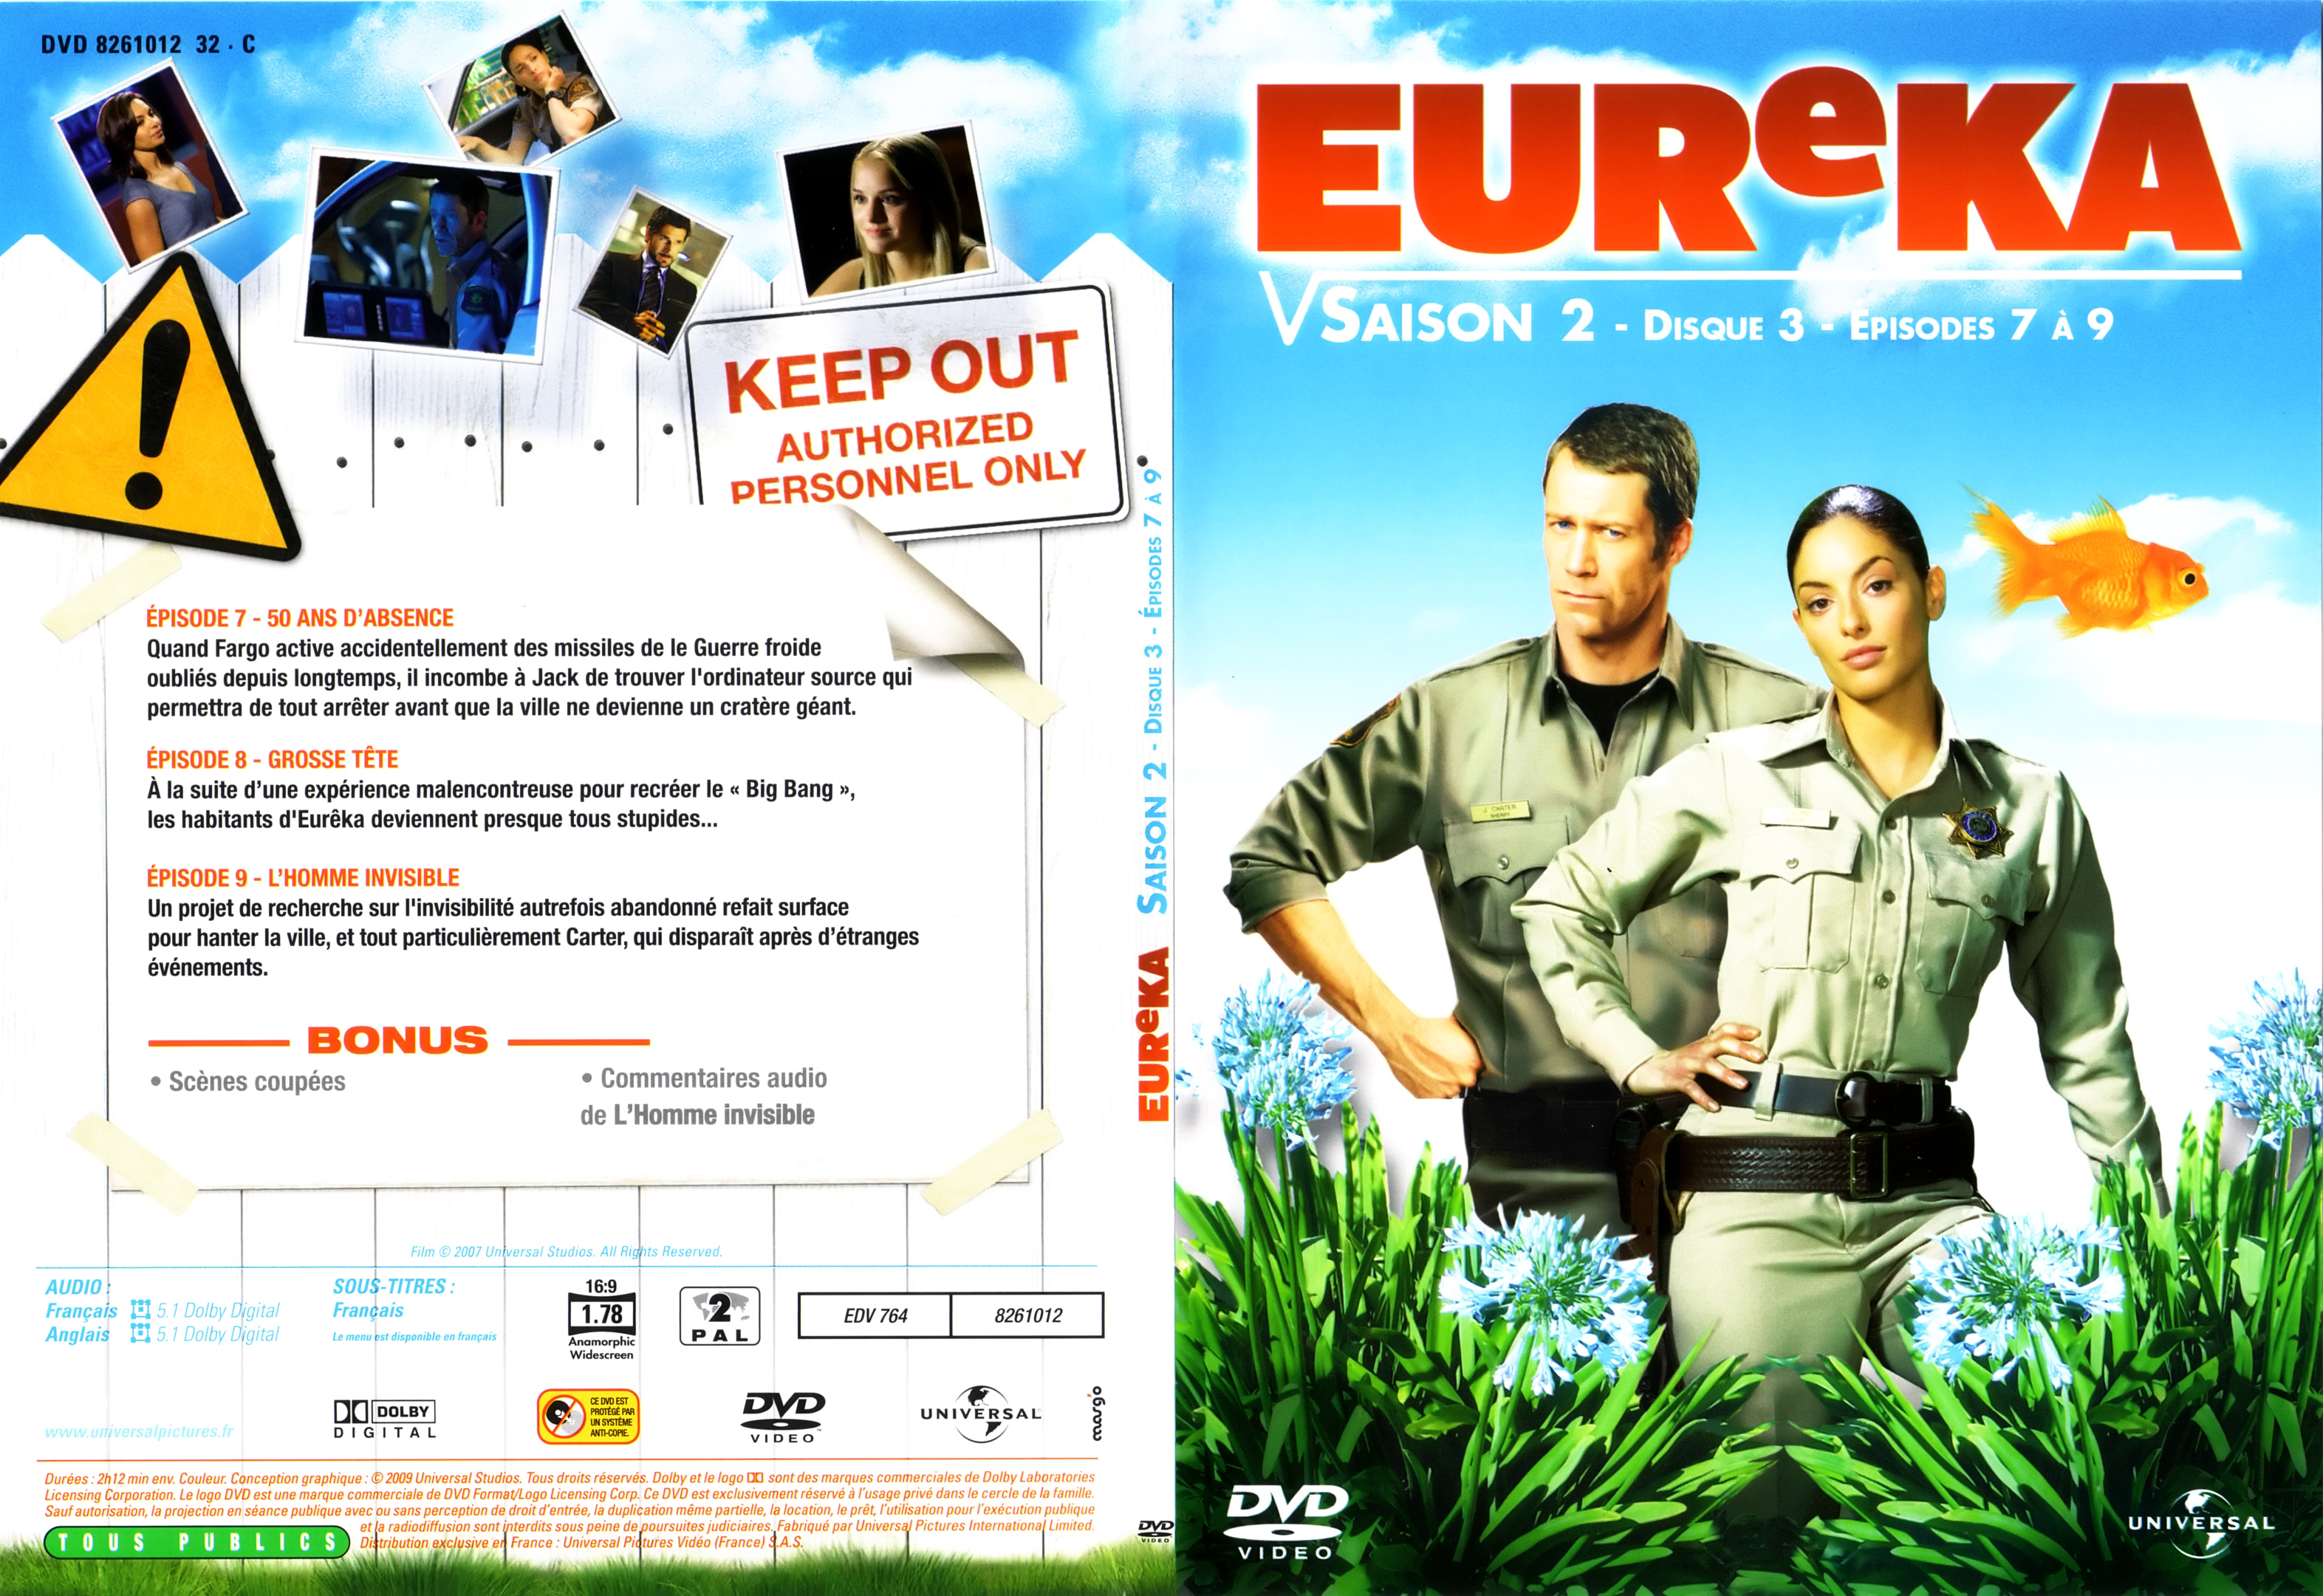 Jaquette DVD Eureka saison 2 DVD 3